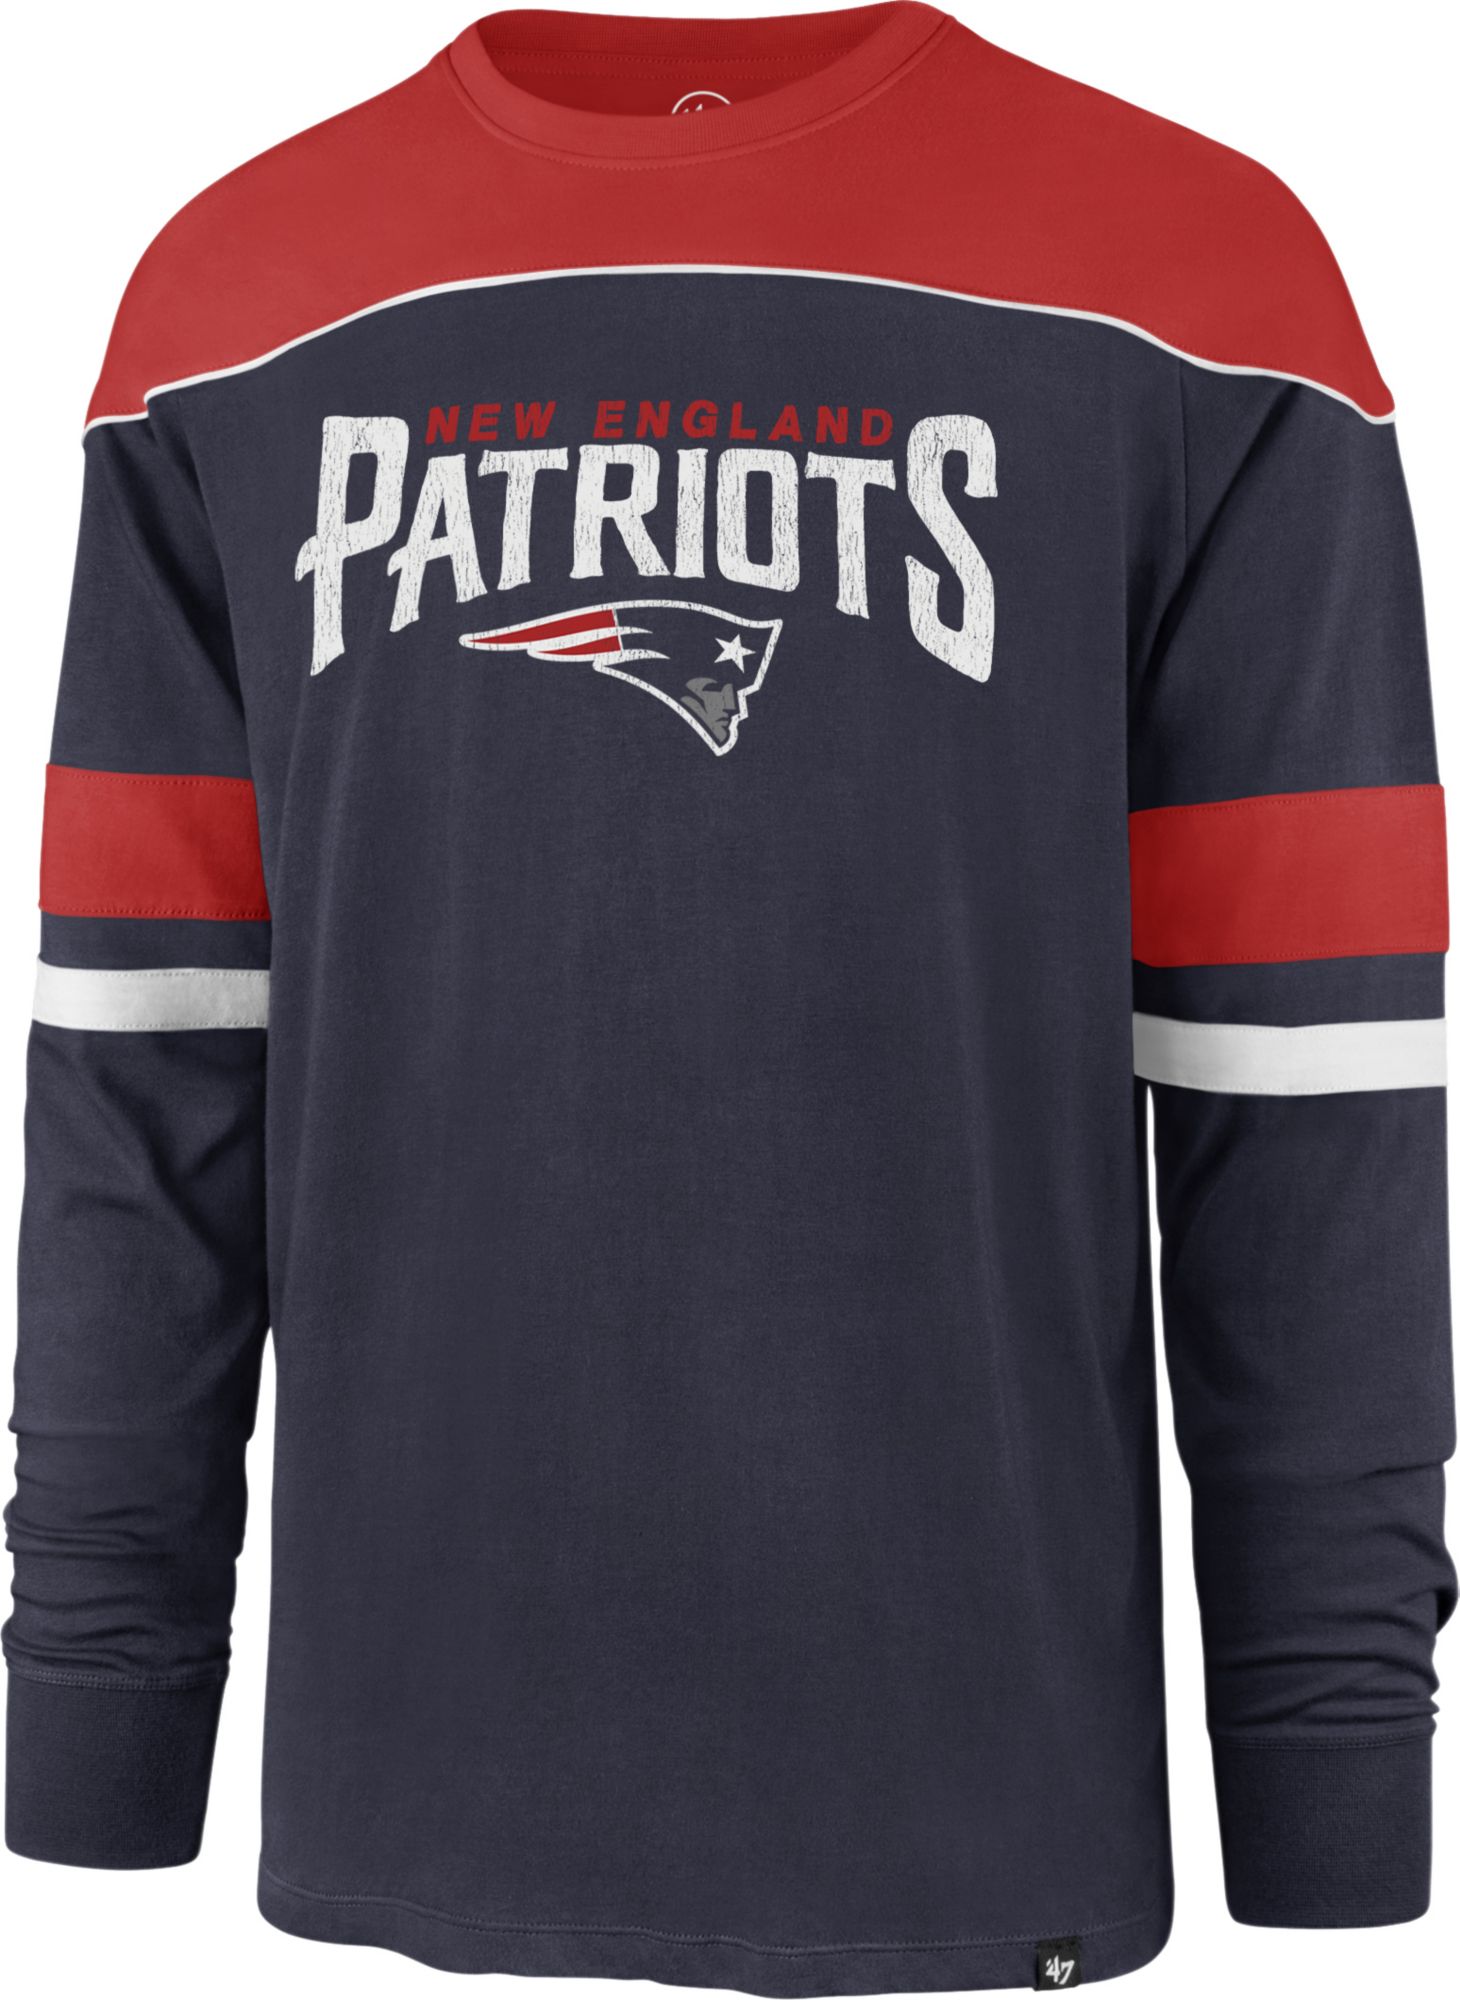 patriots jersey long sleeve